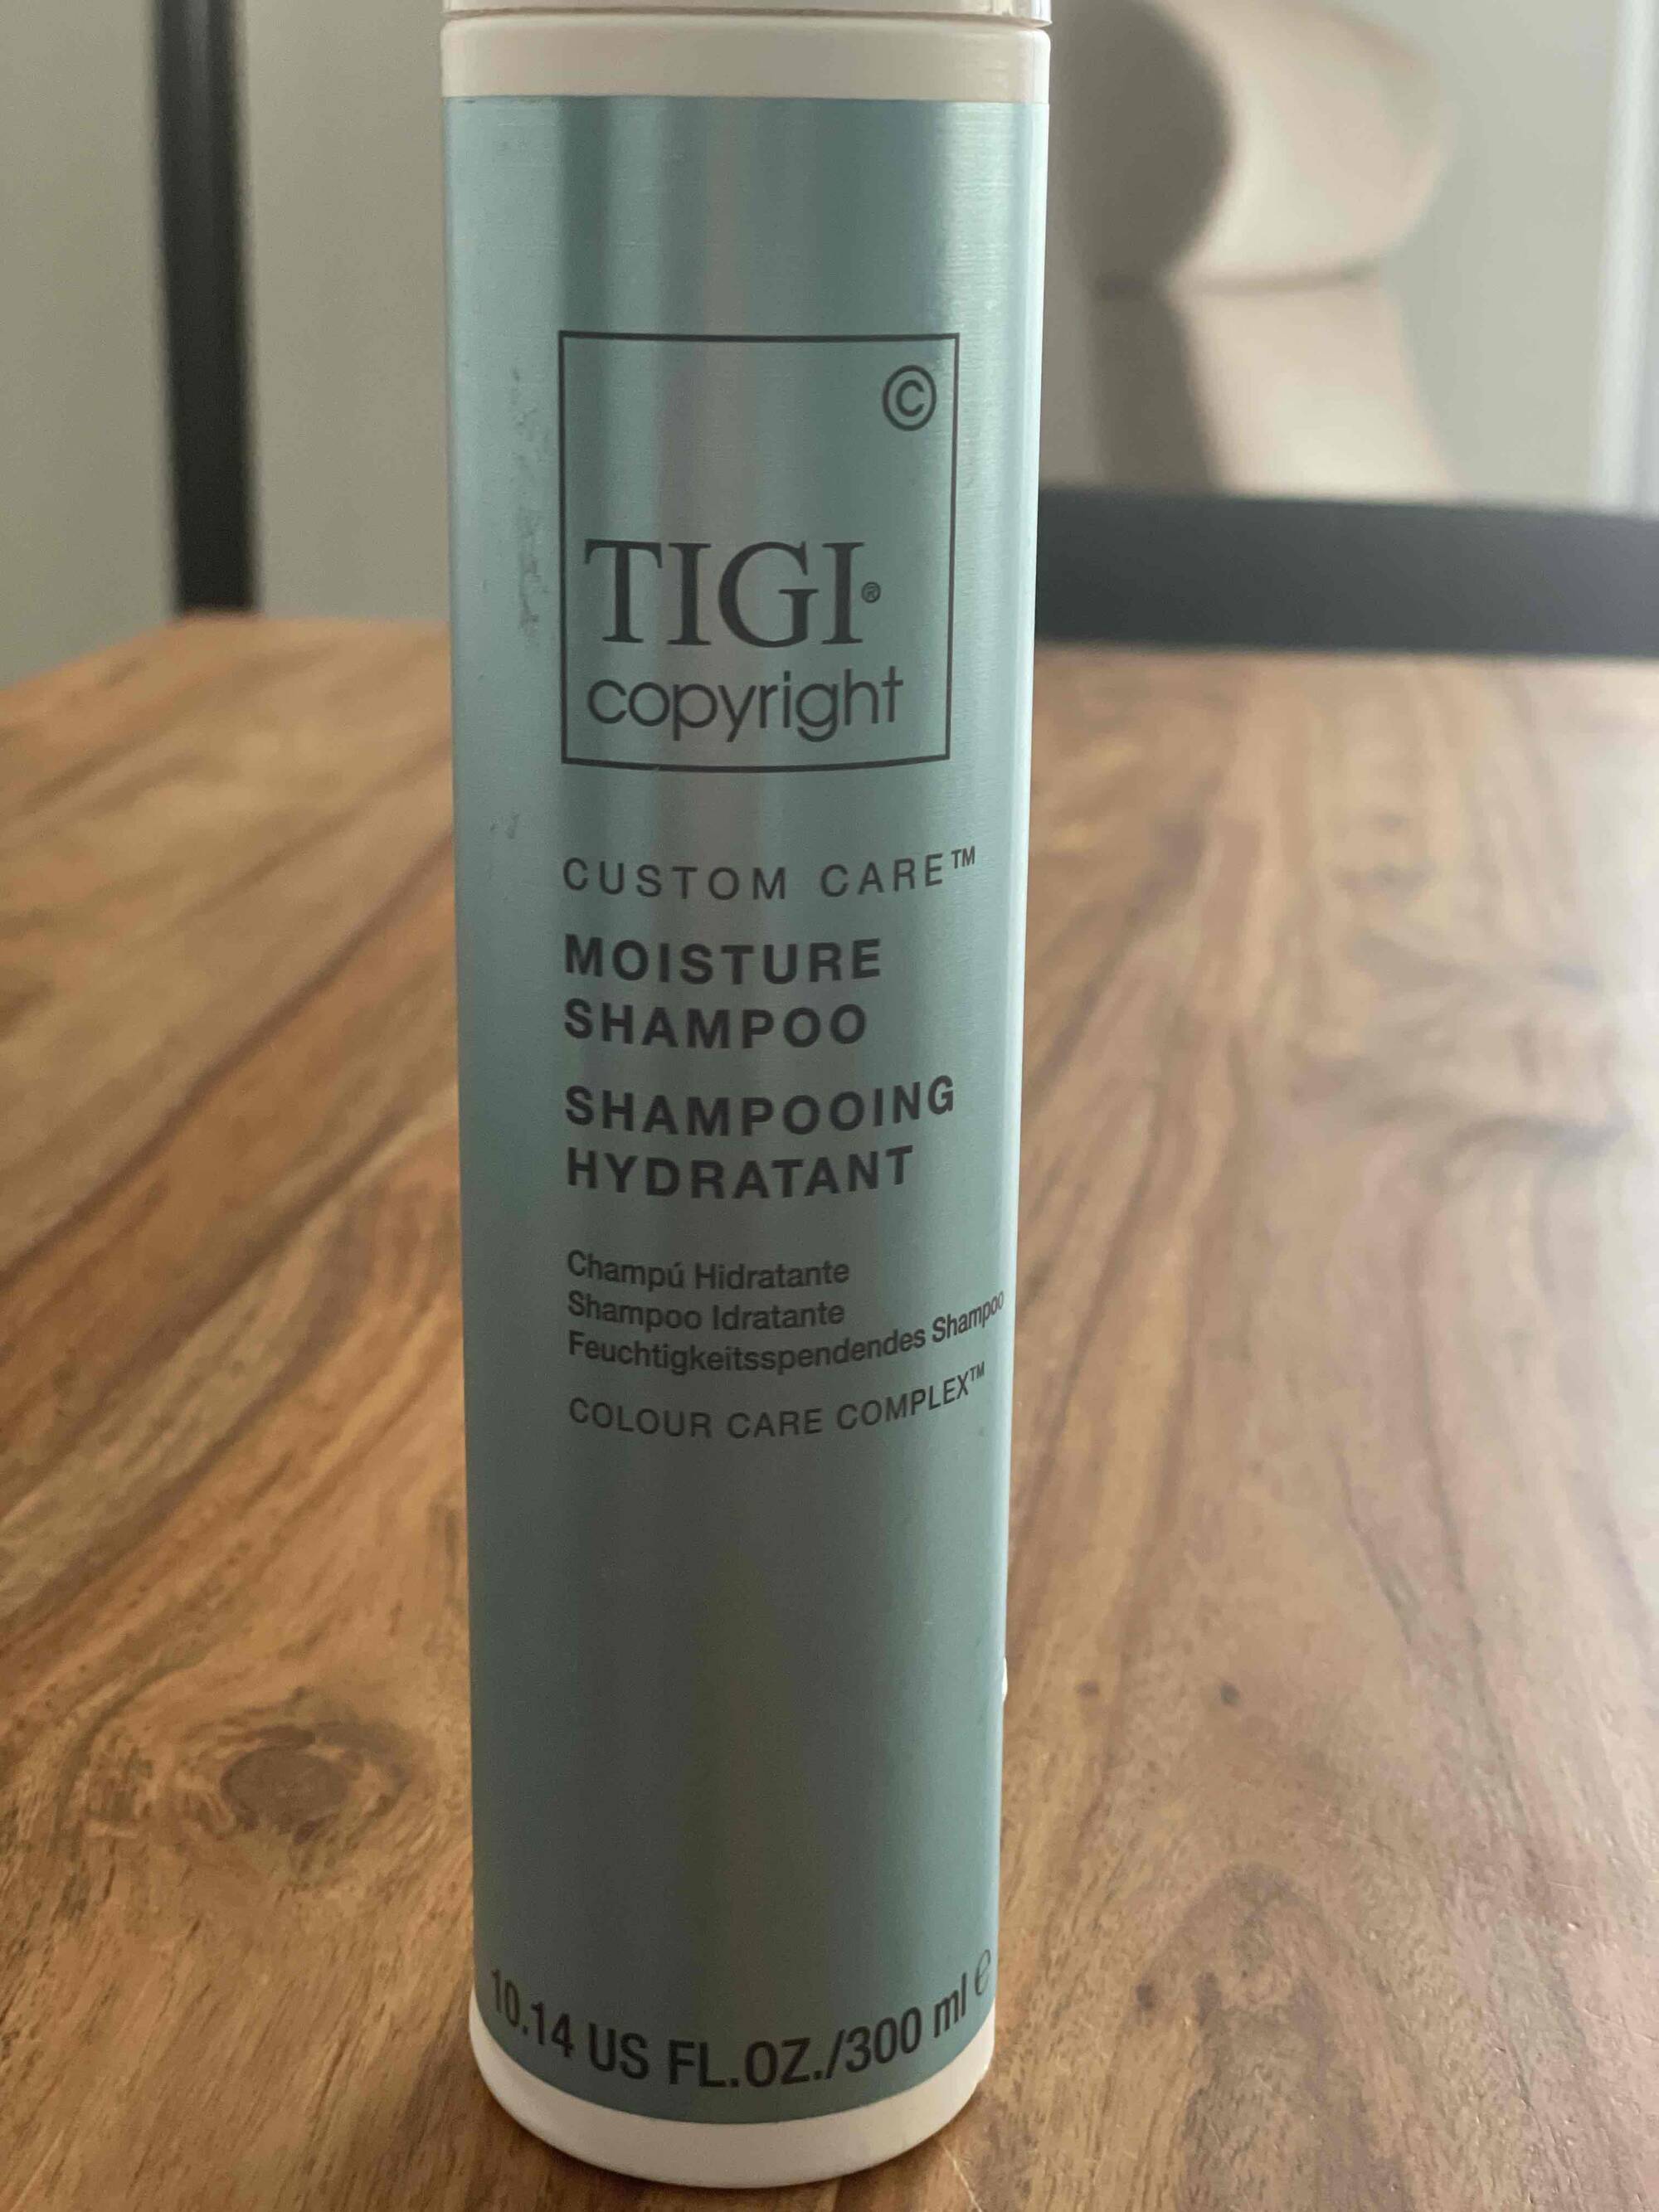 TIGI - Custom care - Shampooing hydratant 